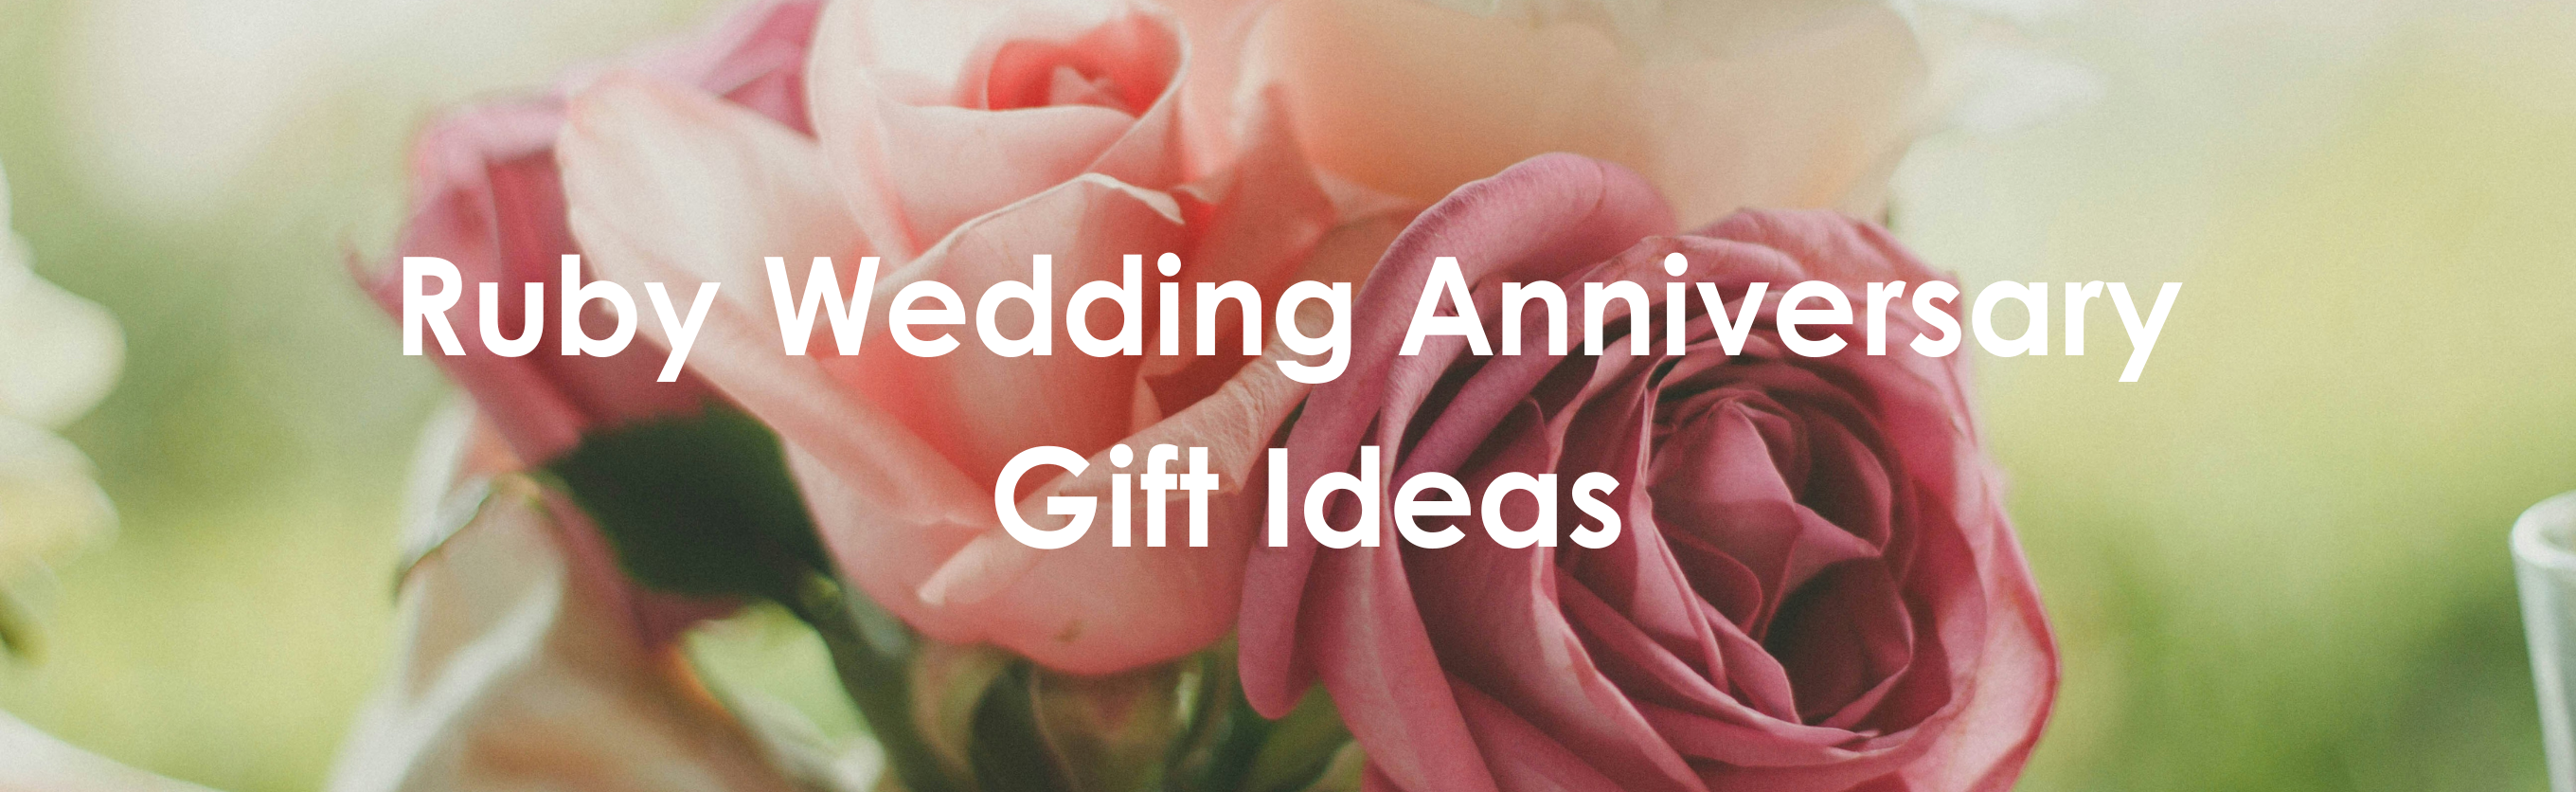 Ruby Wedding Anniversary Gift Ideas